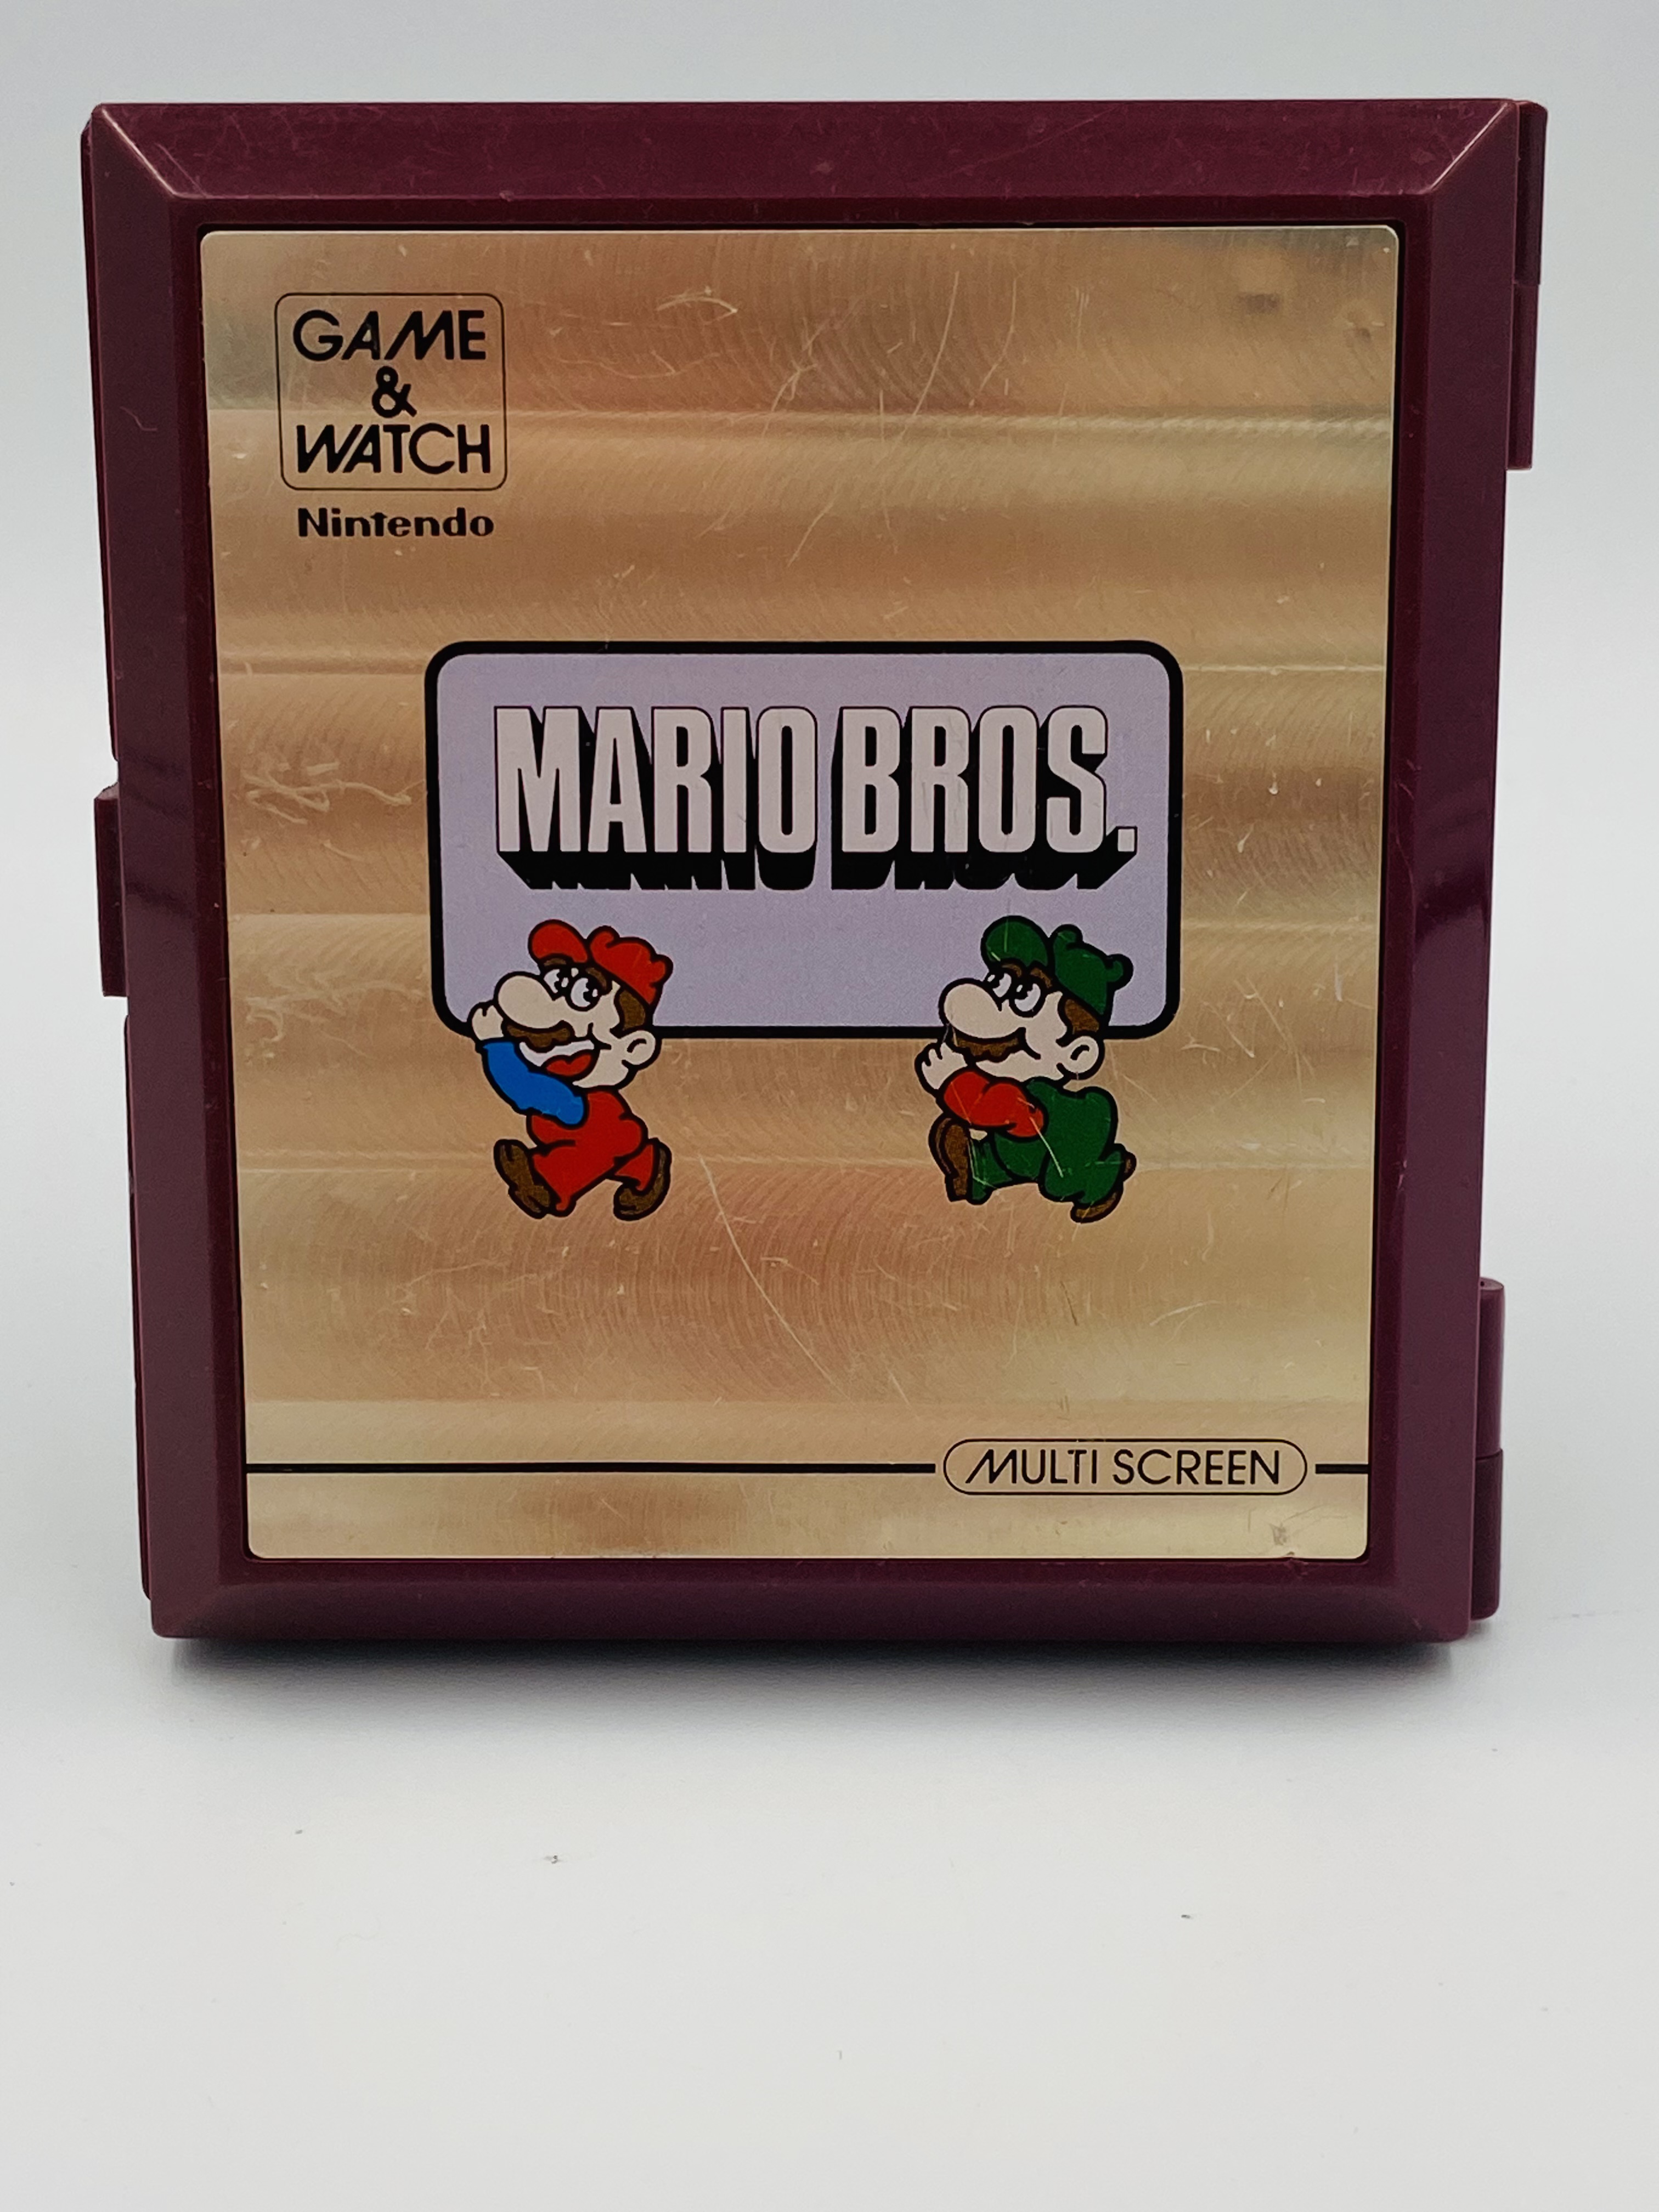 Nintendo Game 7 Watch Mario Bros, model MW-56